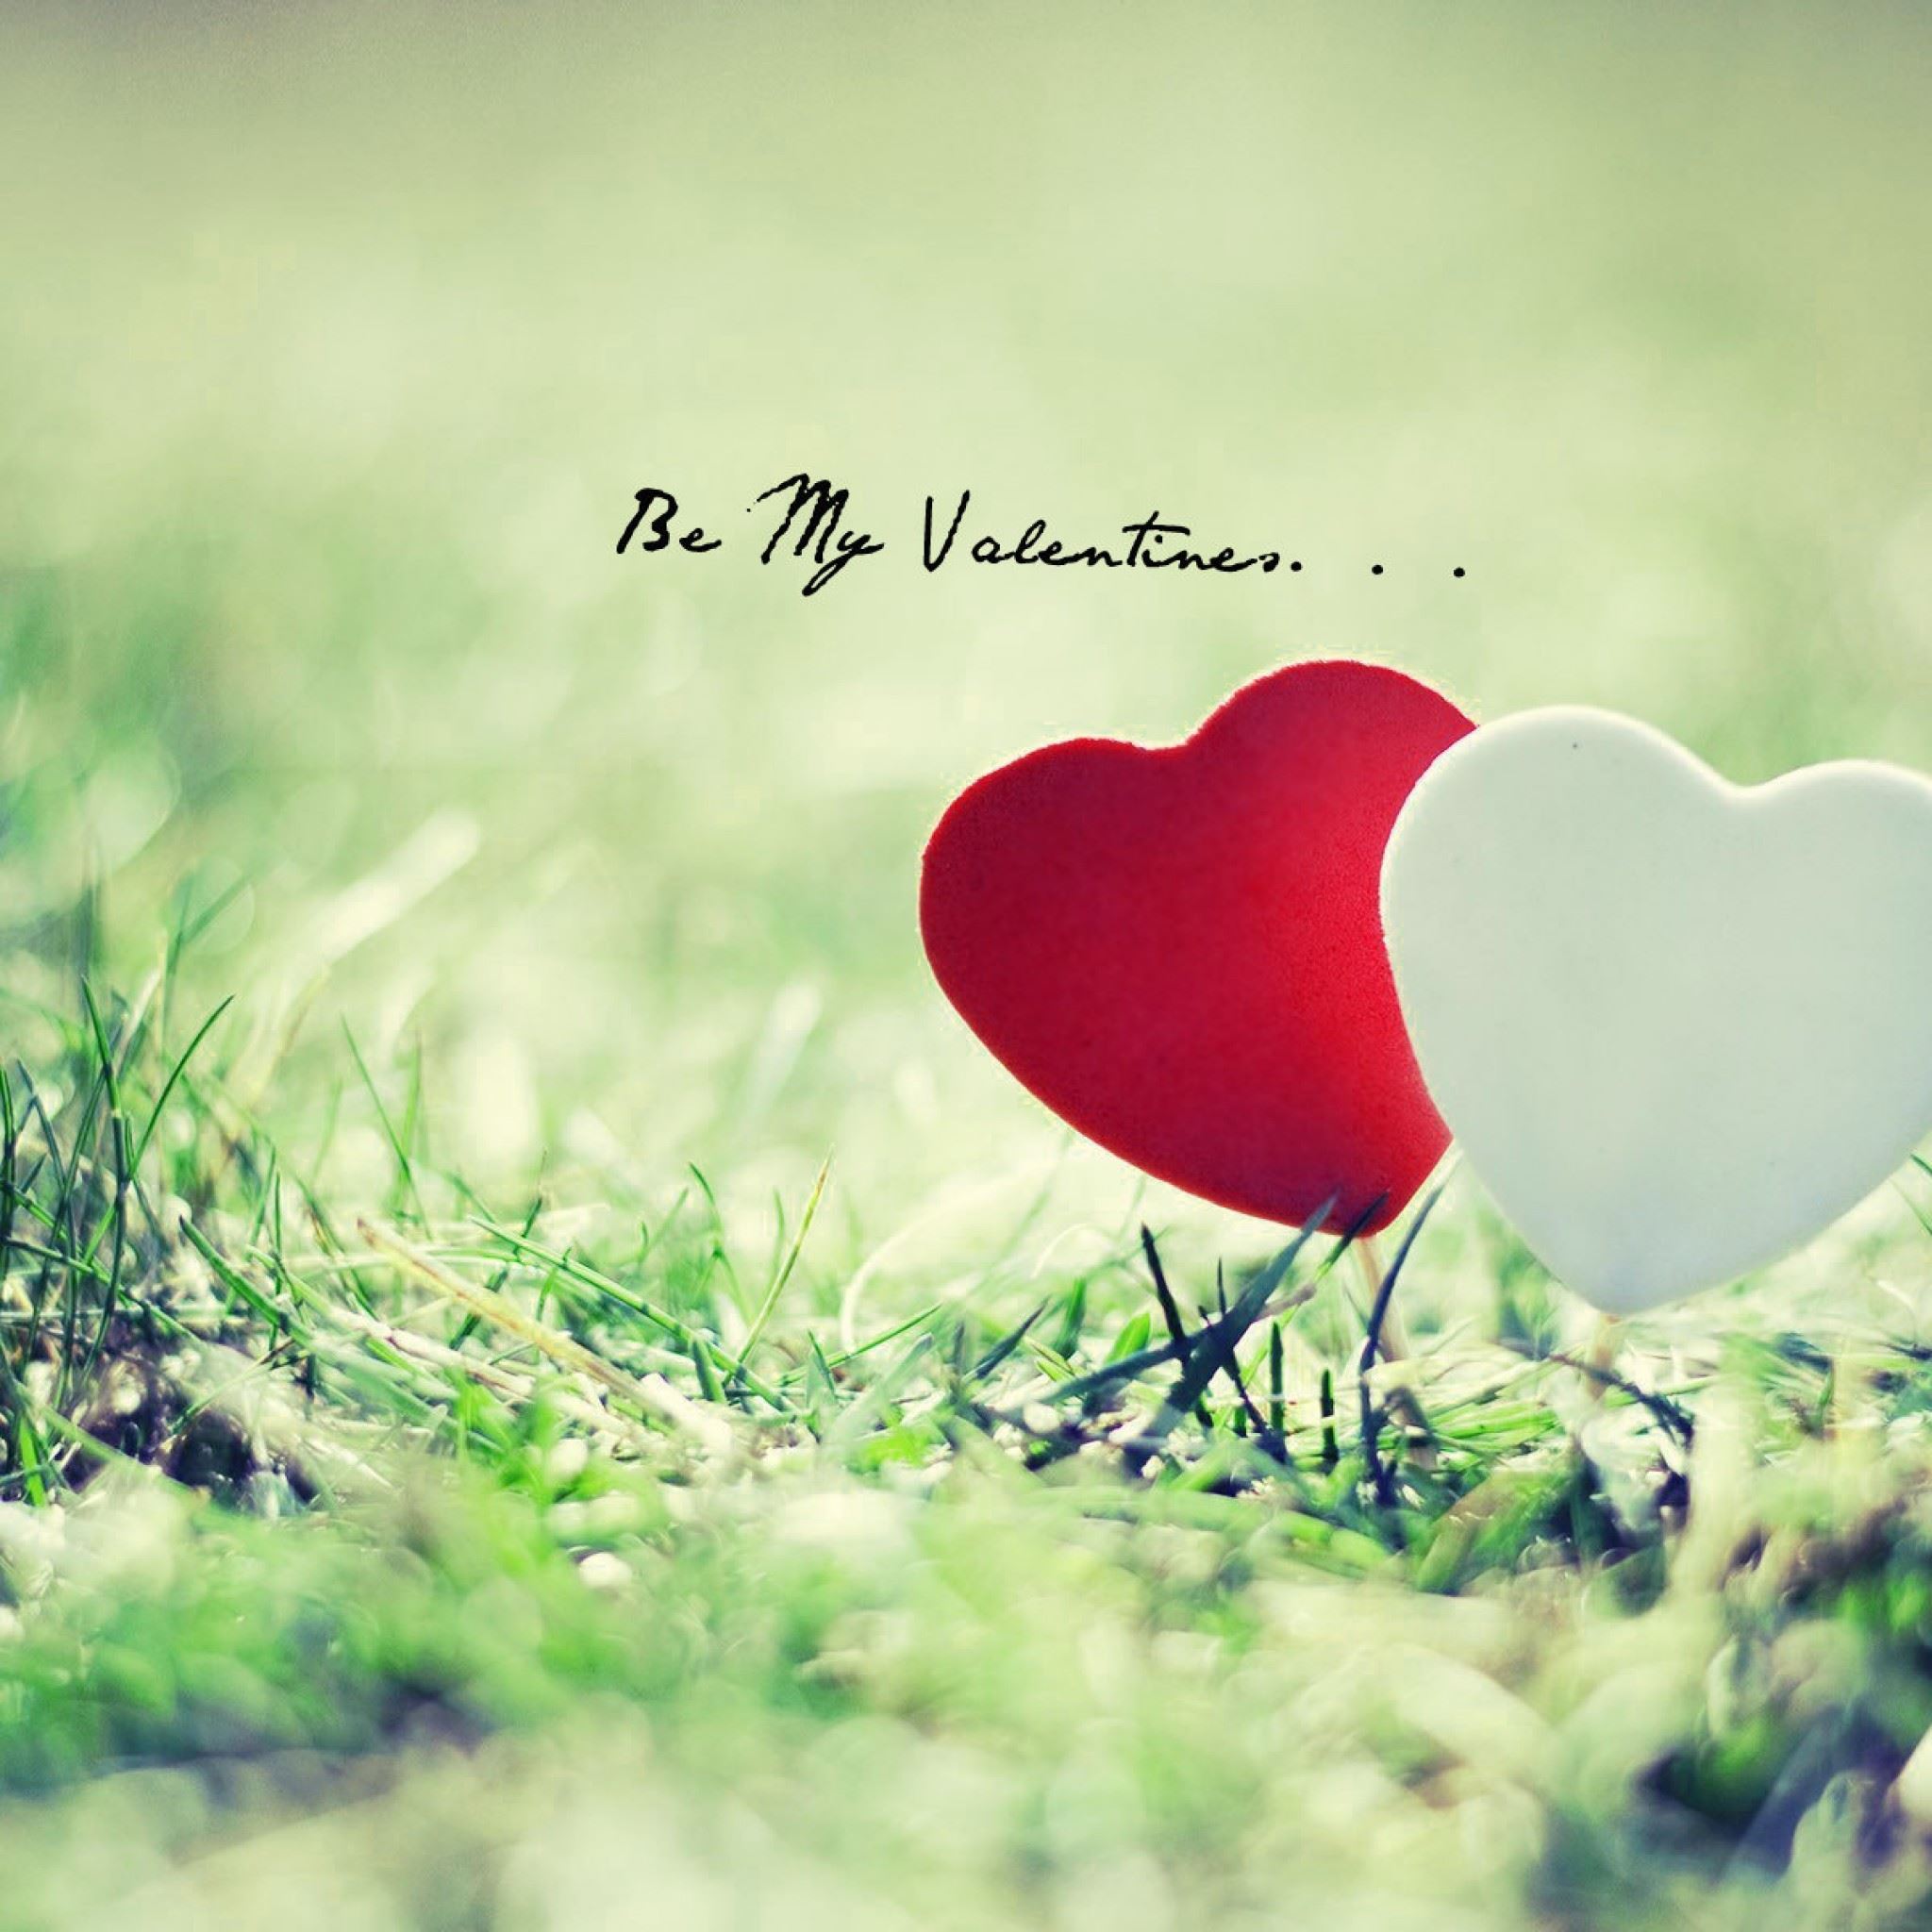 Be My Valentine Hearts Grass iPad Air wallpaper 